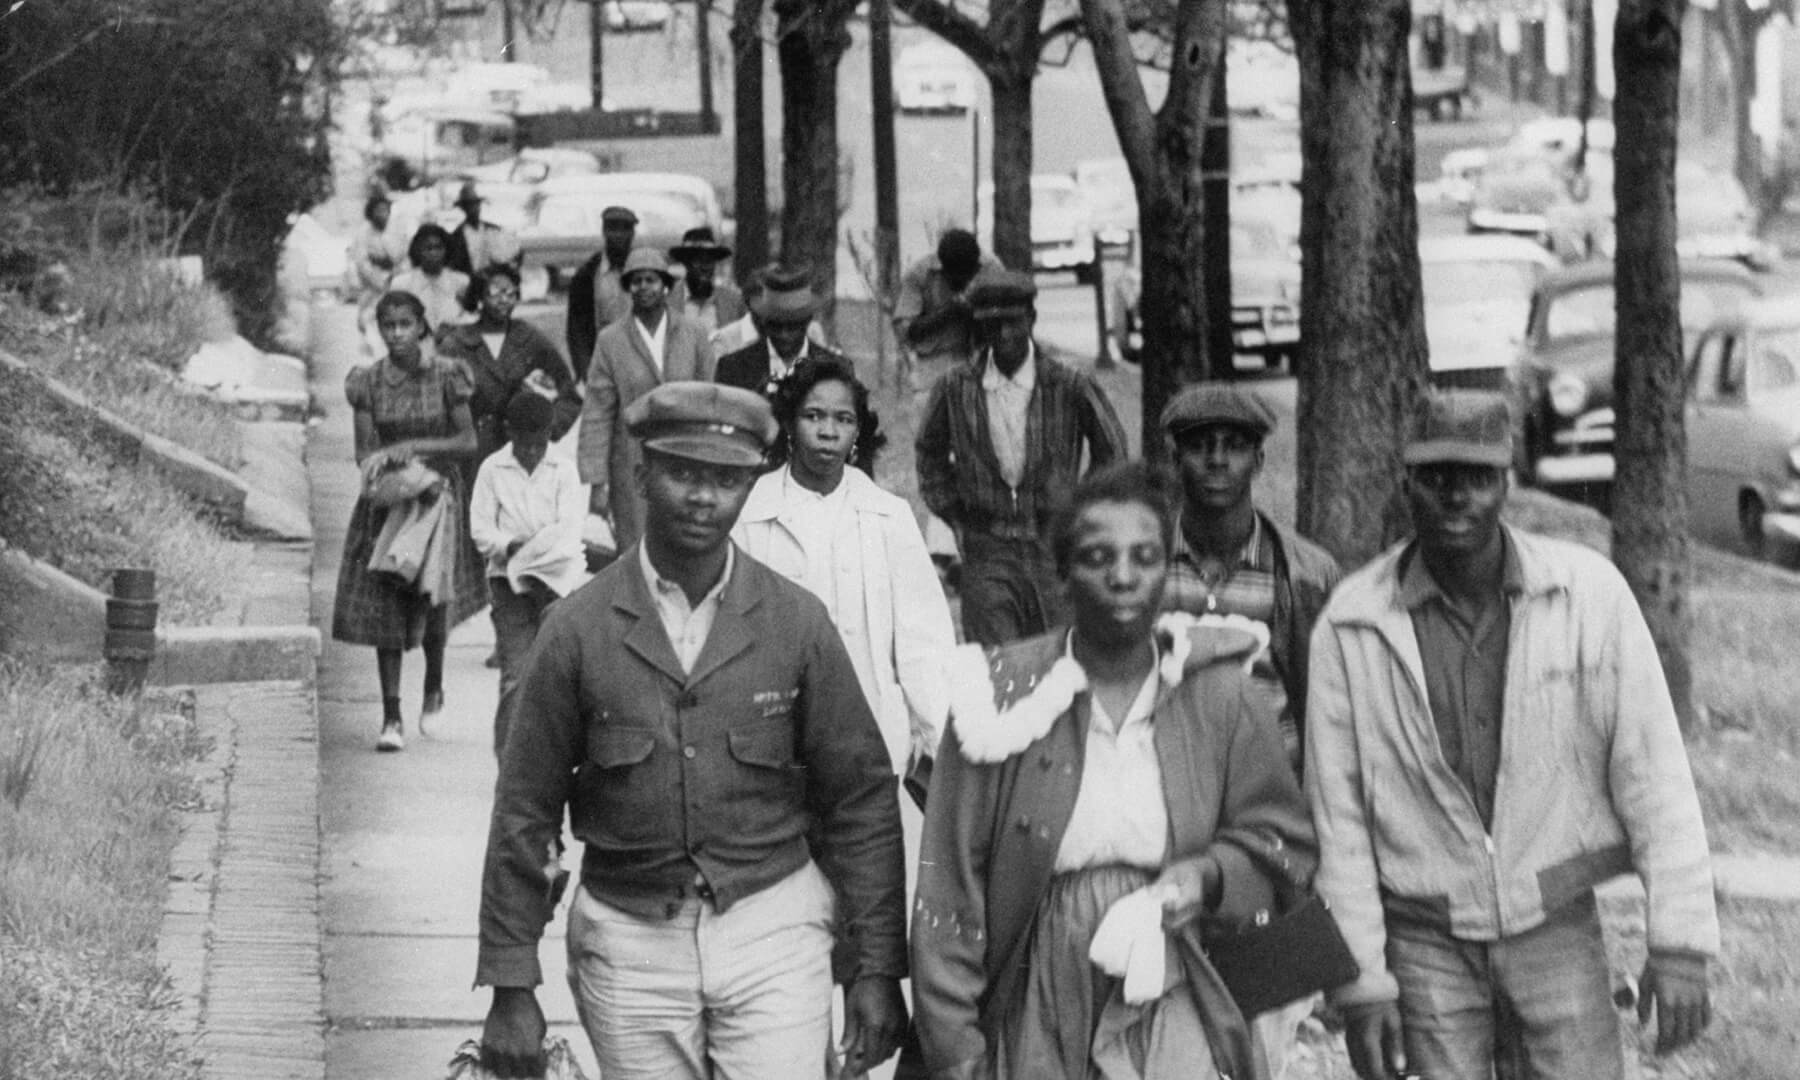 civil rights movement - activism - march - organize - black lives matter